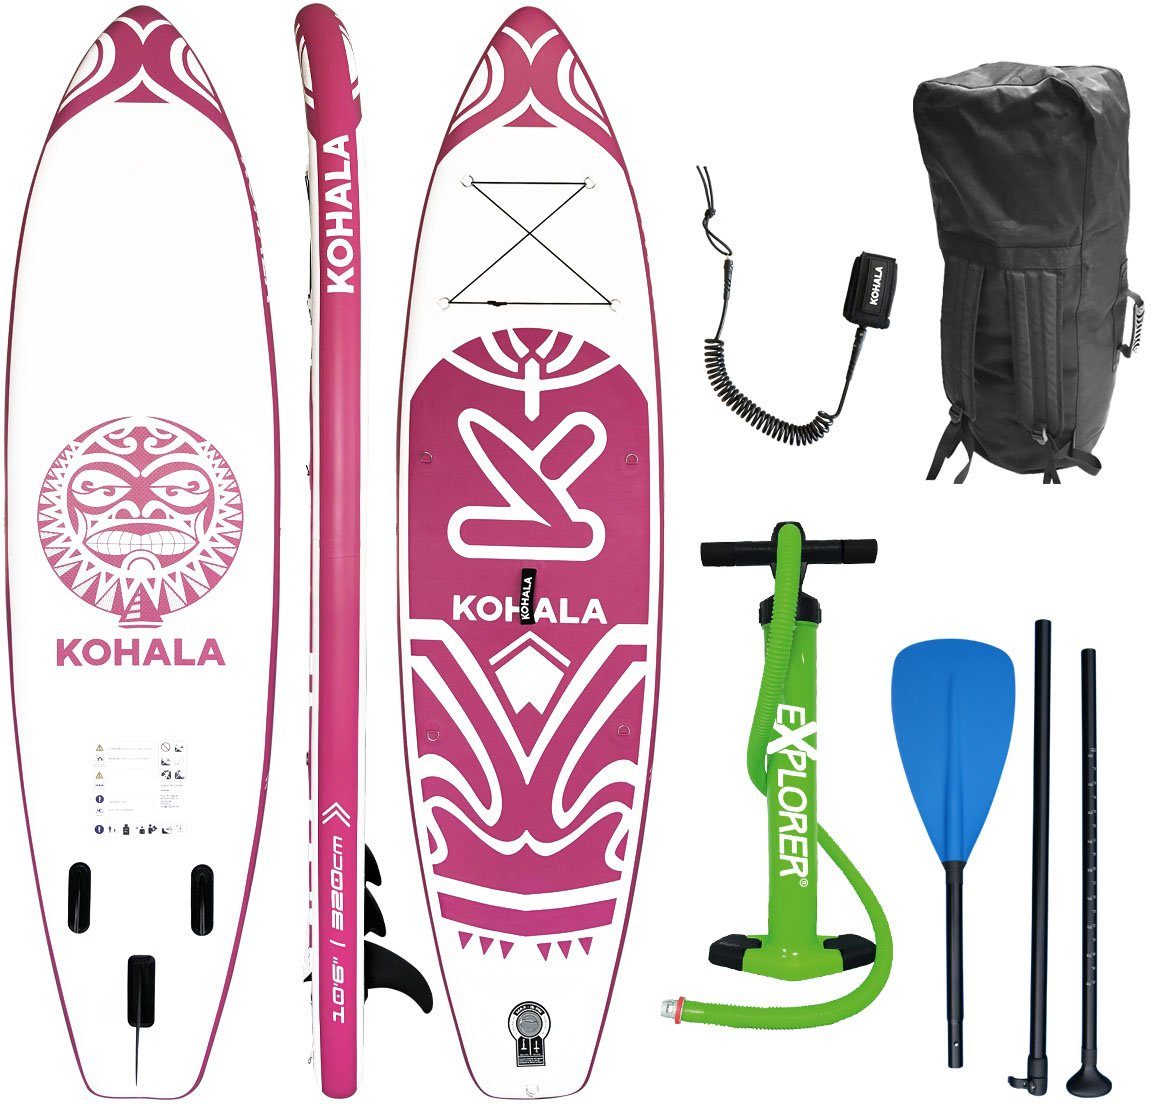 tlg) KOHALA SUP-Board Kohala, weiß/pink Inflatable (6